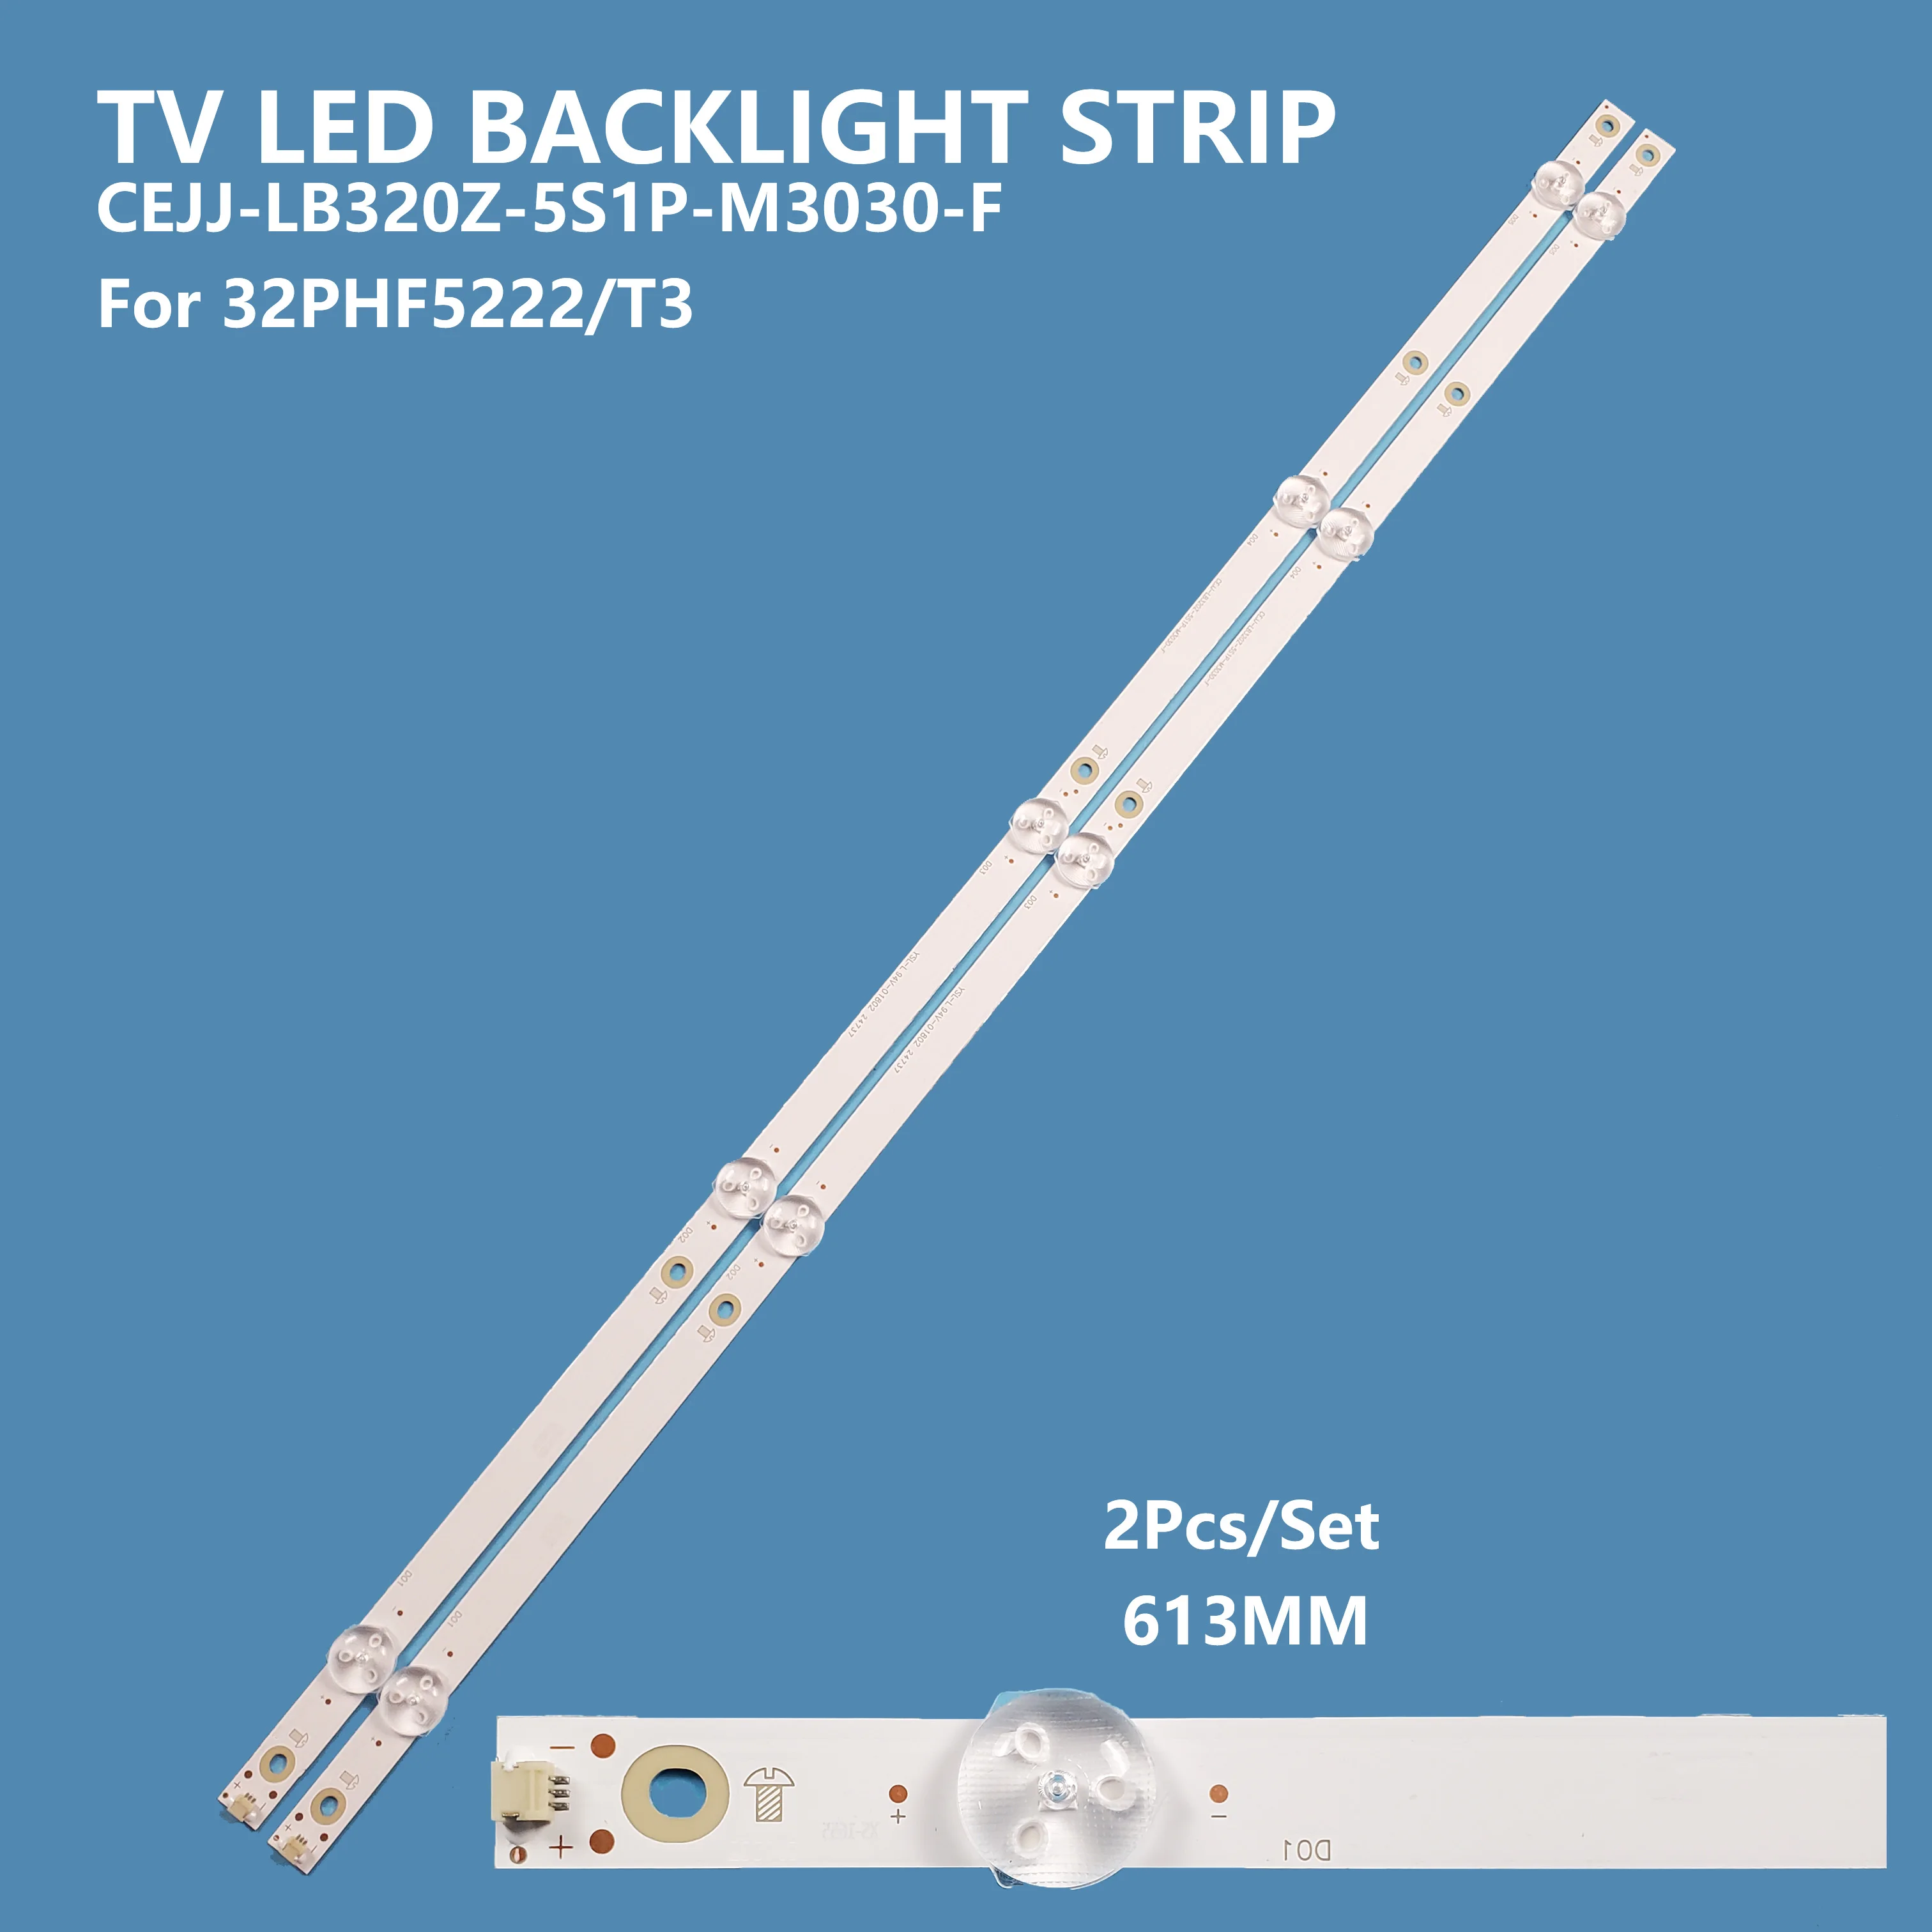 2PCS/set New Arrival TV Led Backlight Strip CEJJ-LB320Z-5S1P-M3030-F For PHILIPS 32inch 32PHF5222/T3 tv Bar Light Accessories